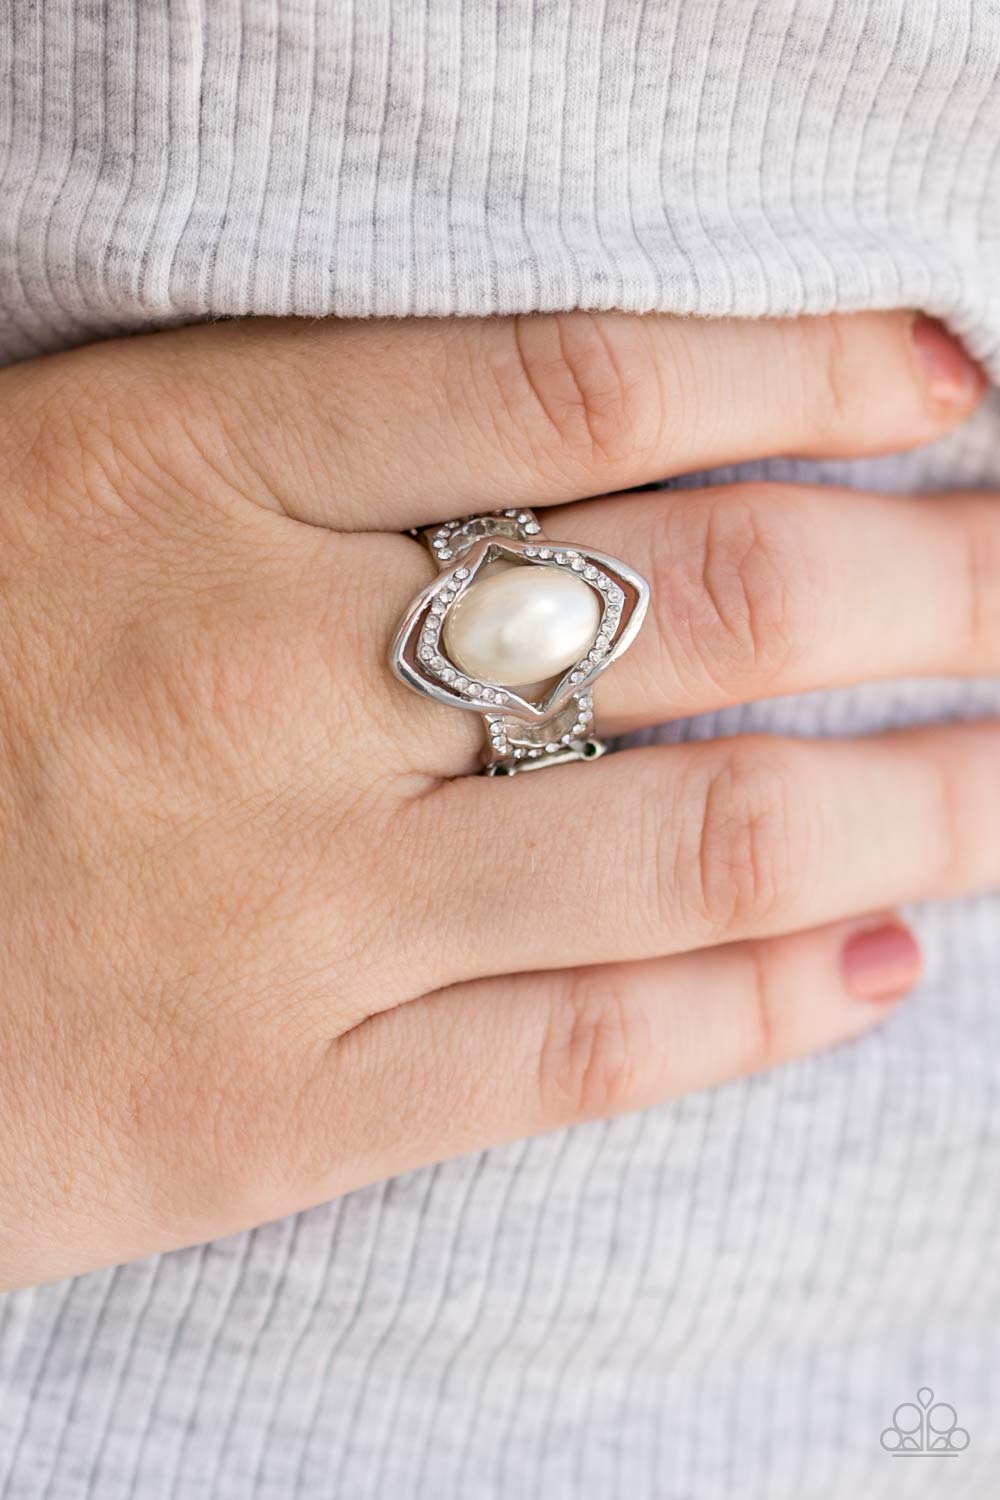 Positively Posh - White ring